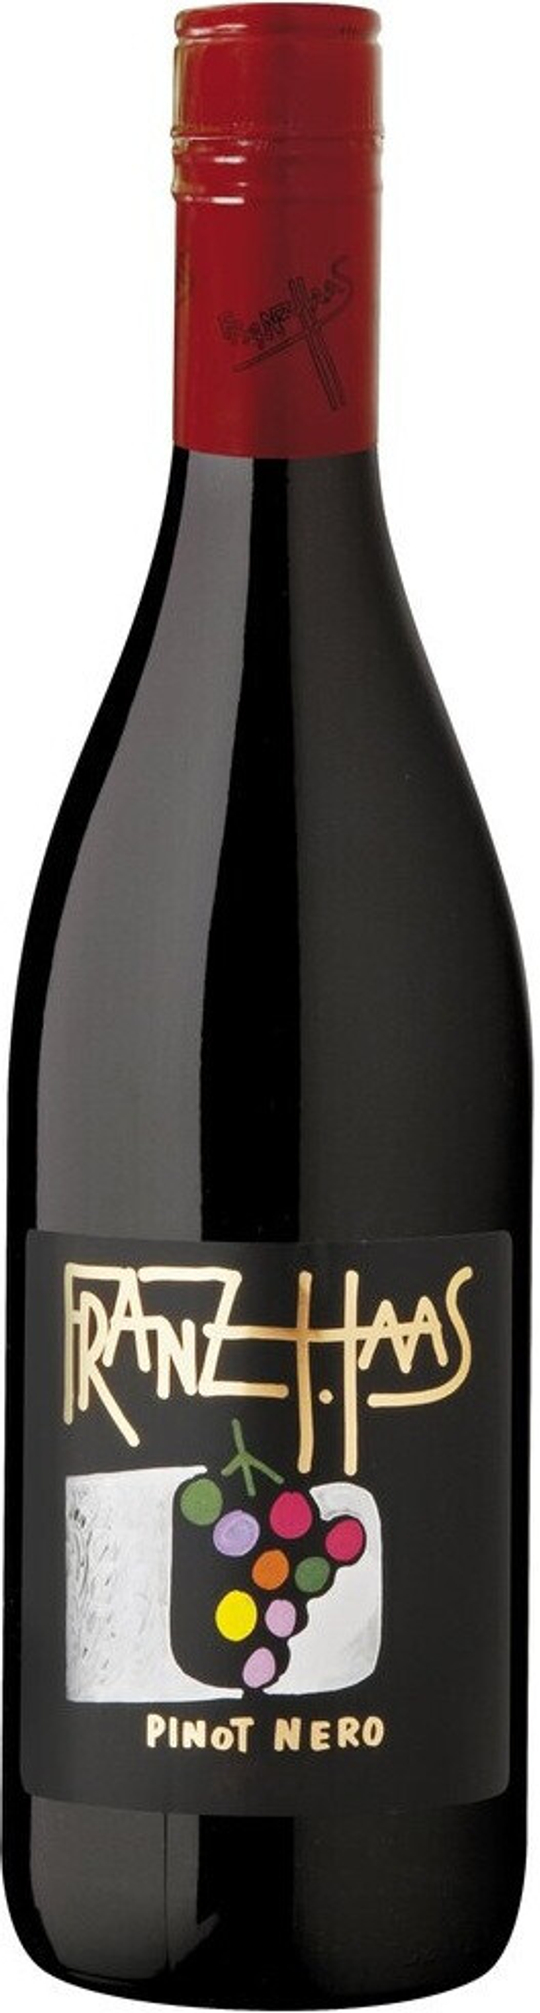 Вино Franz Haas Pinot Nero, 0,75 л.